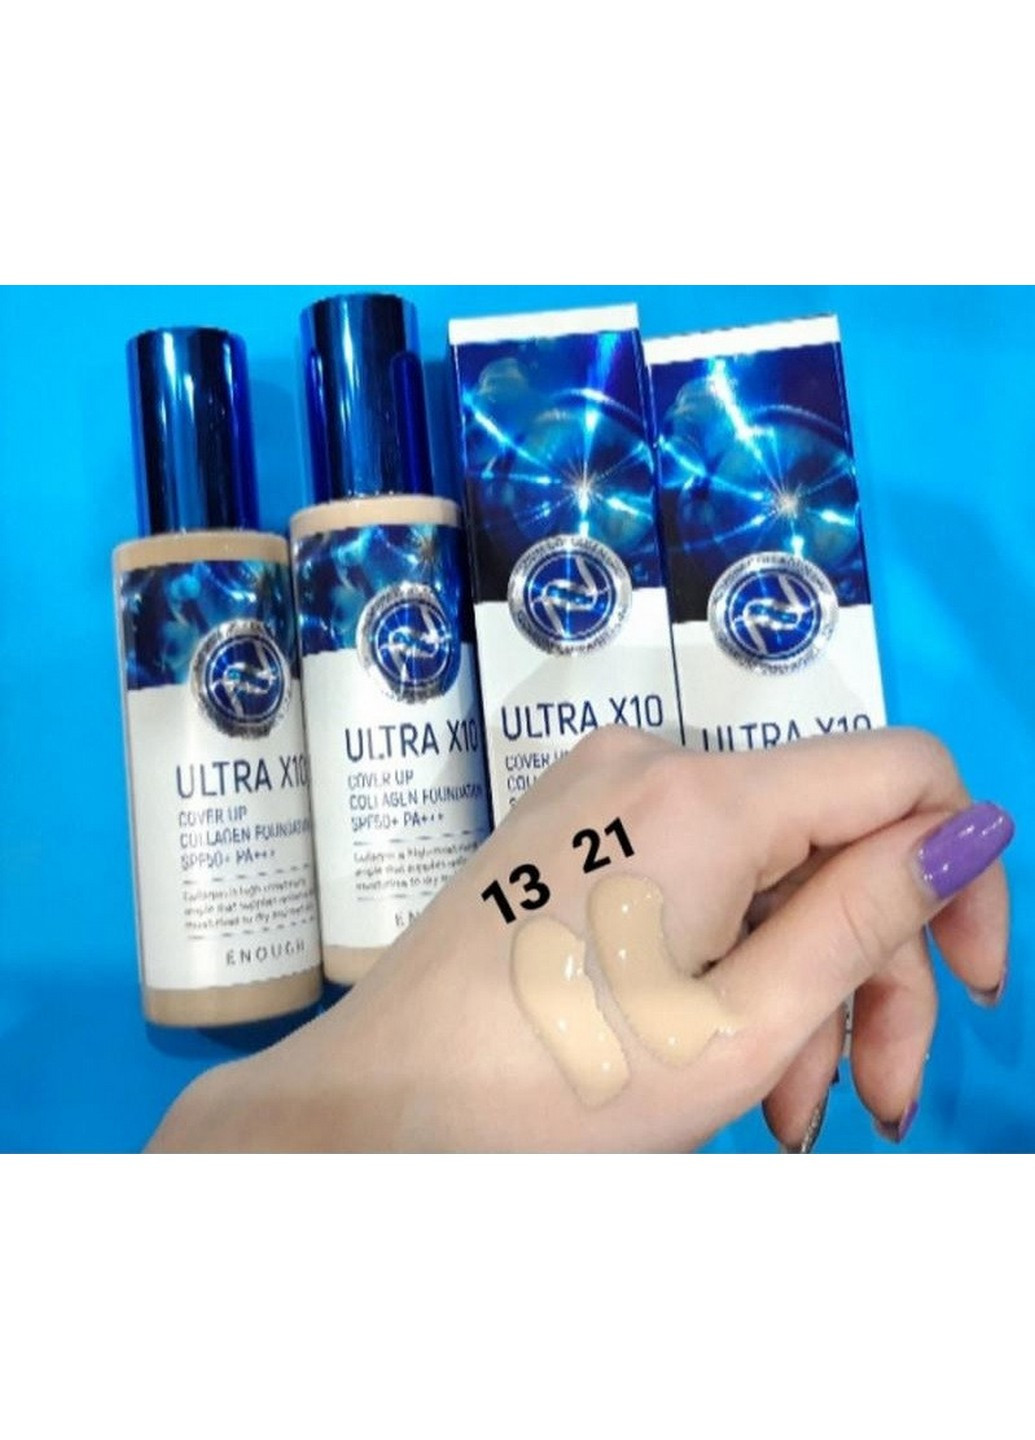 Основа тональная для лица увлажняющая Ultra X10 Cover Up Collagen № 13 100 мл ENOUGH (255375617)